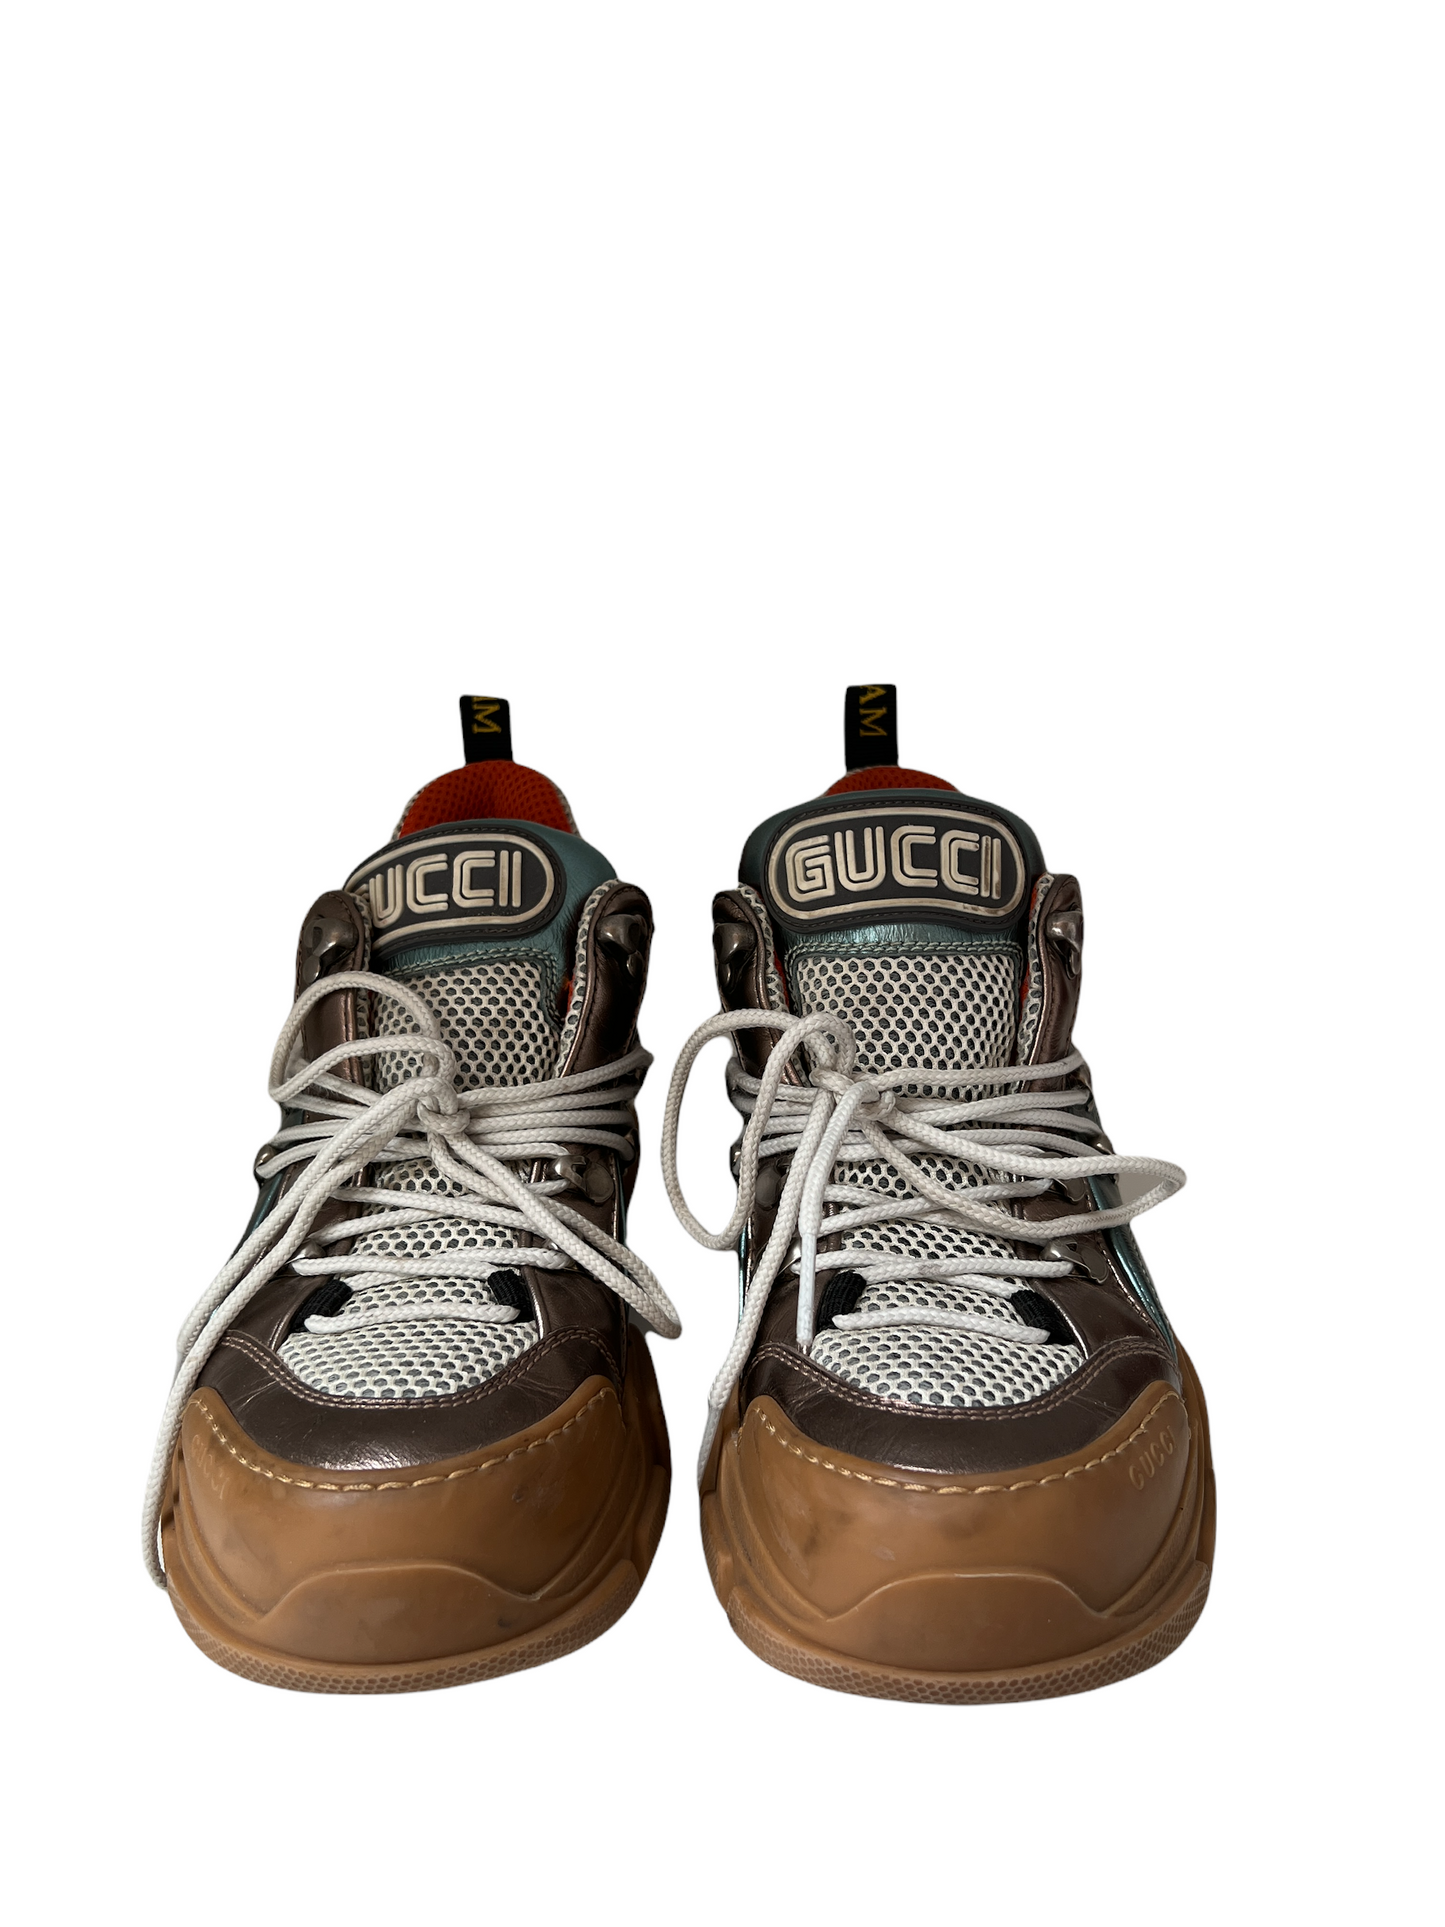 FlashTrek Sneaker Boots - 7.5